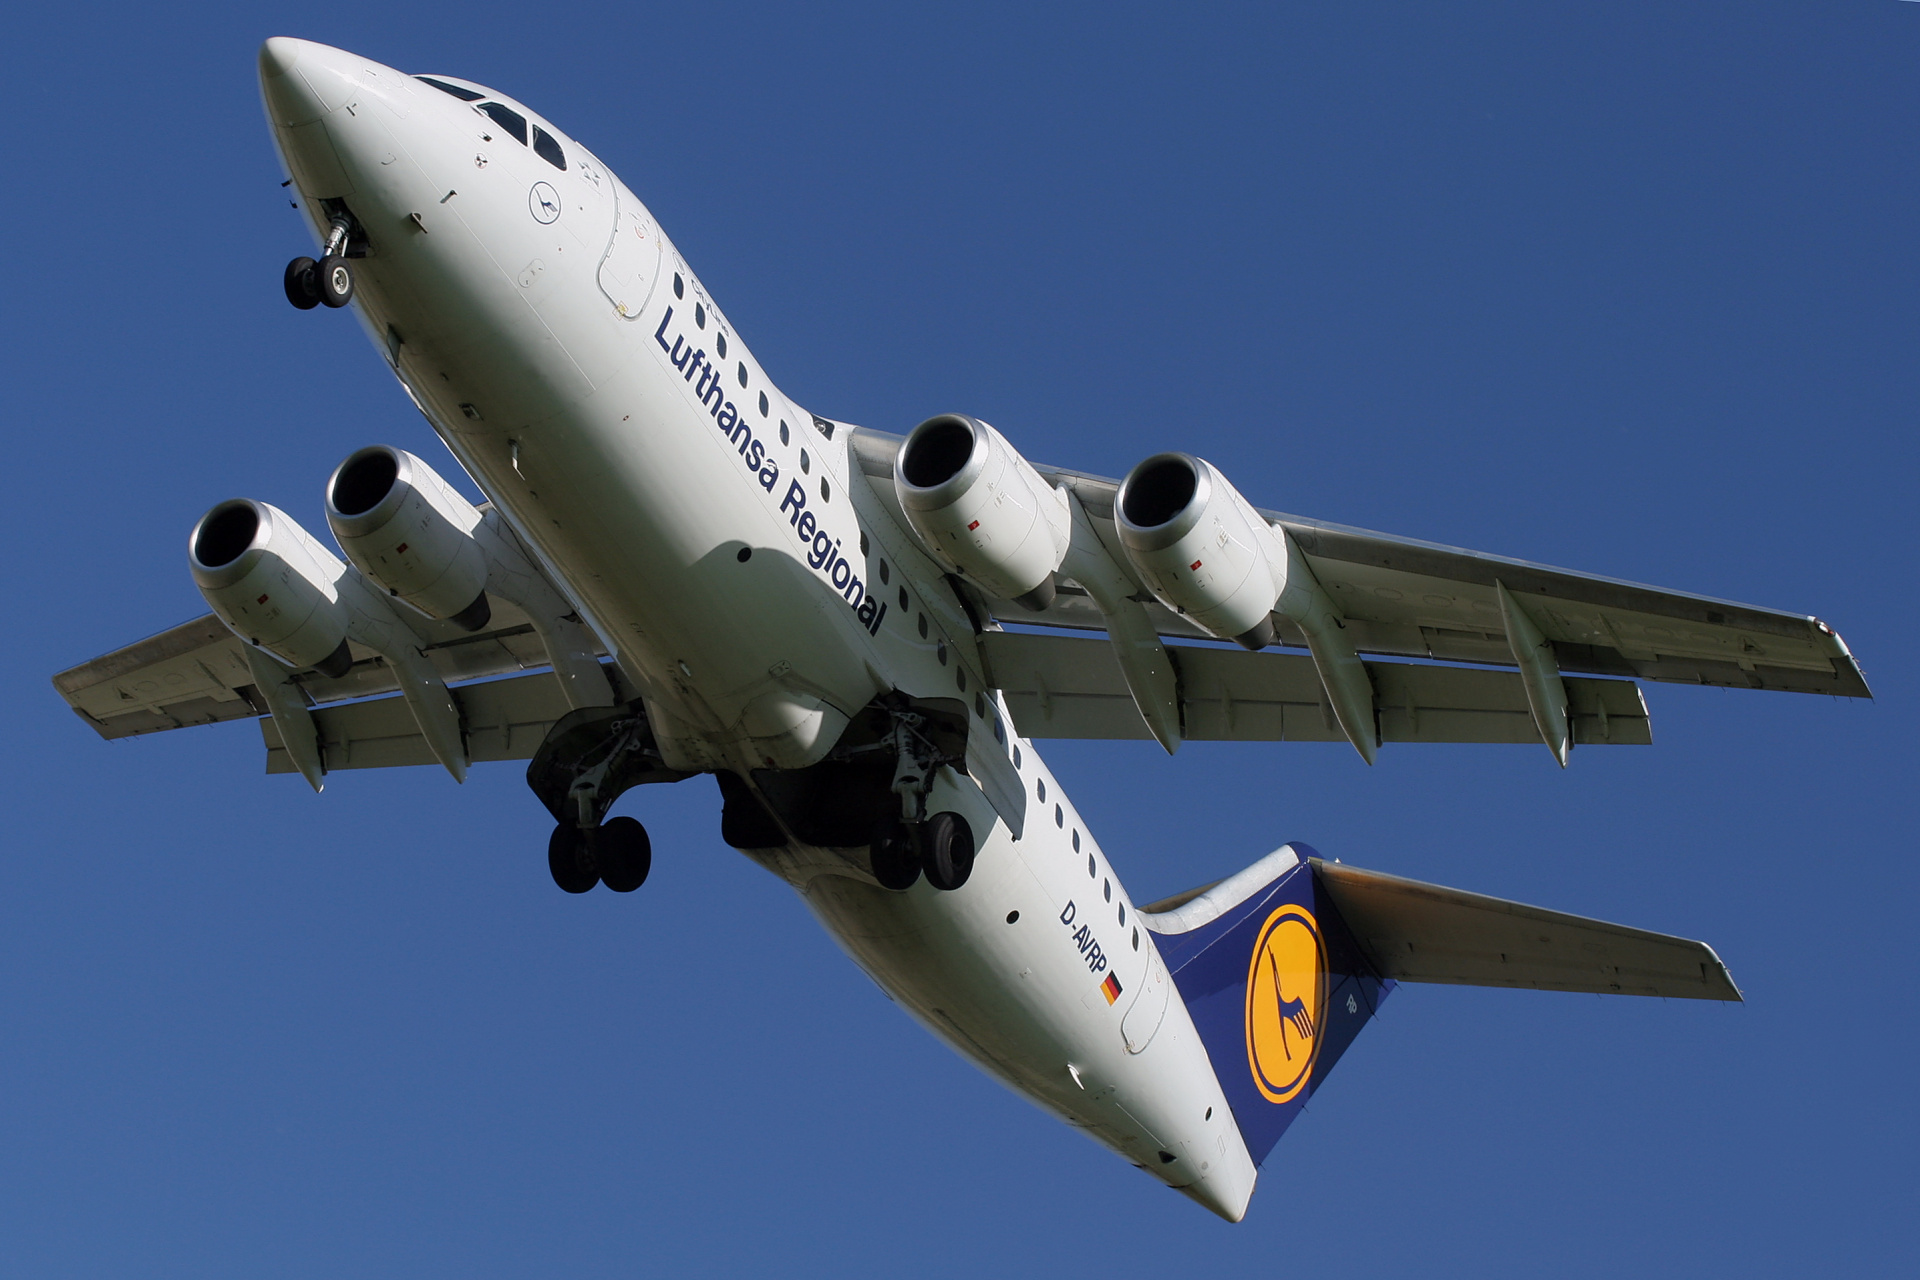 D-AVRP (CityLine) (Aircraft » EPWA Spotting » BAe 146 and revisions » Avro RJ85 » Lufthansa Regional)